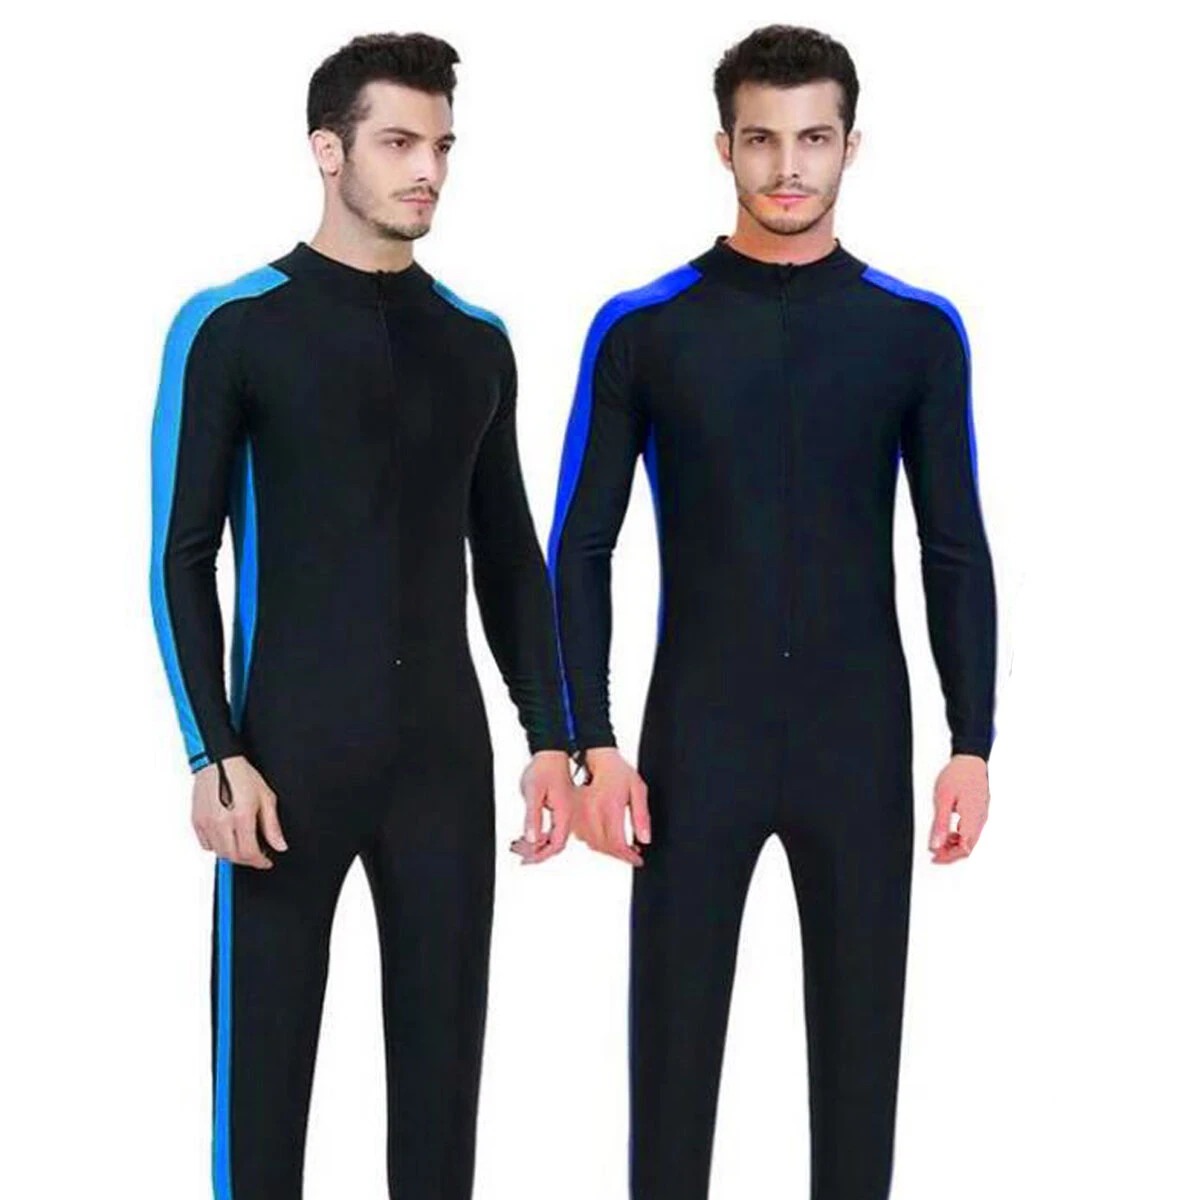 Men Full Body Lightweight Wetsuit Diving Snorkeling Surfing Swim Scuba Suit Jumpsuit Long Sleeves - XL